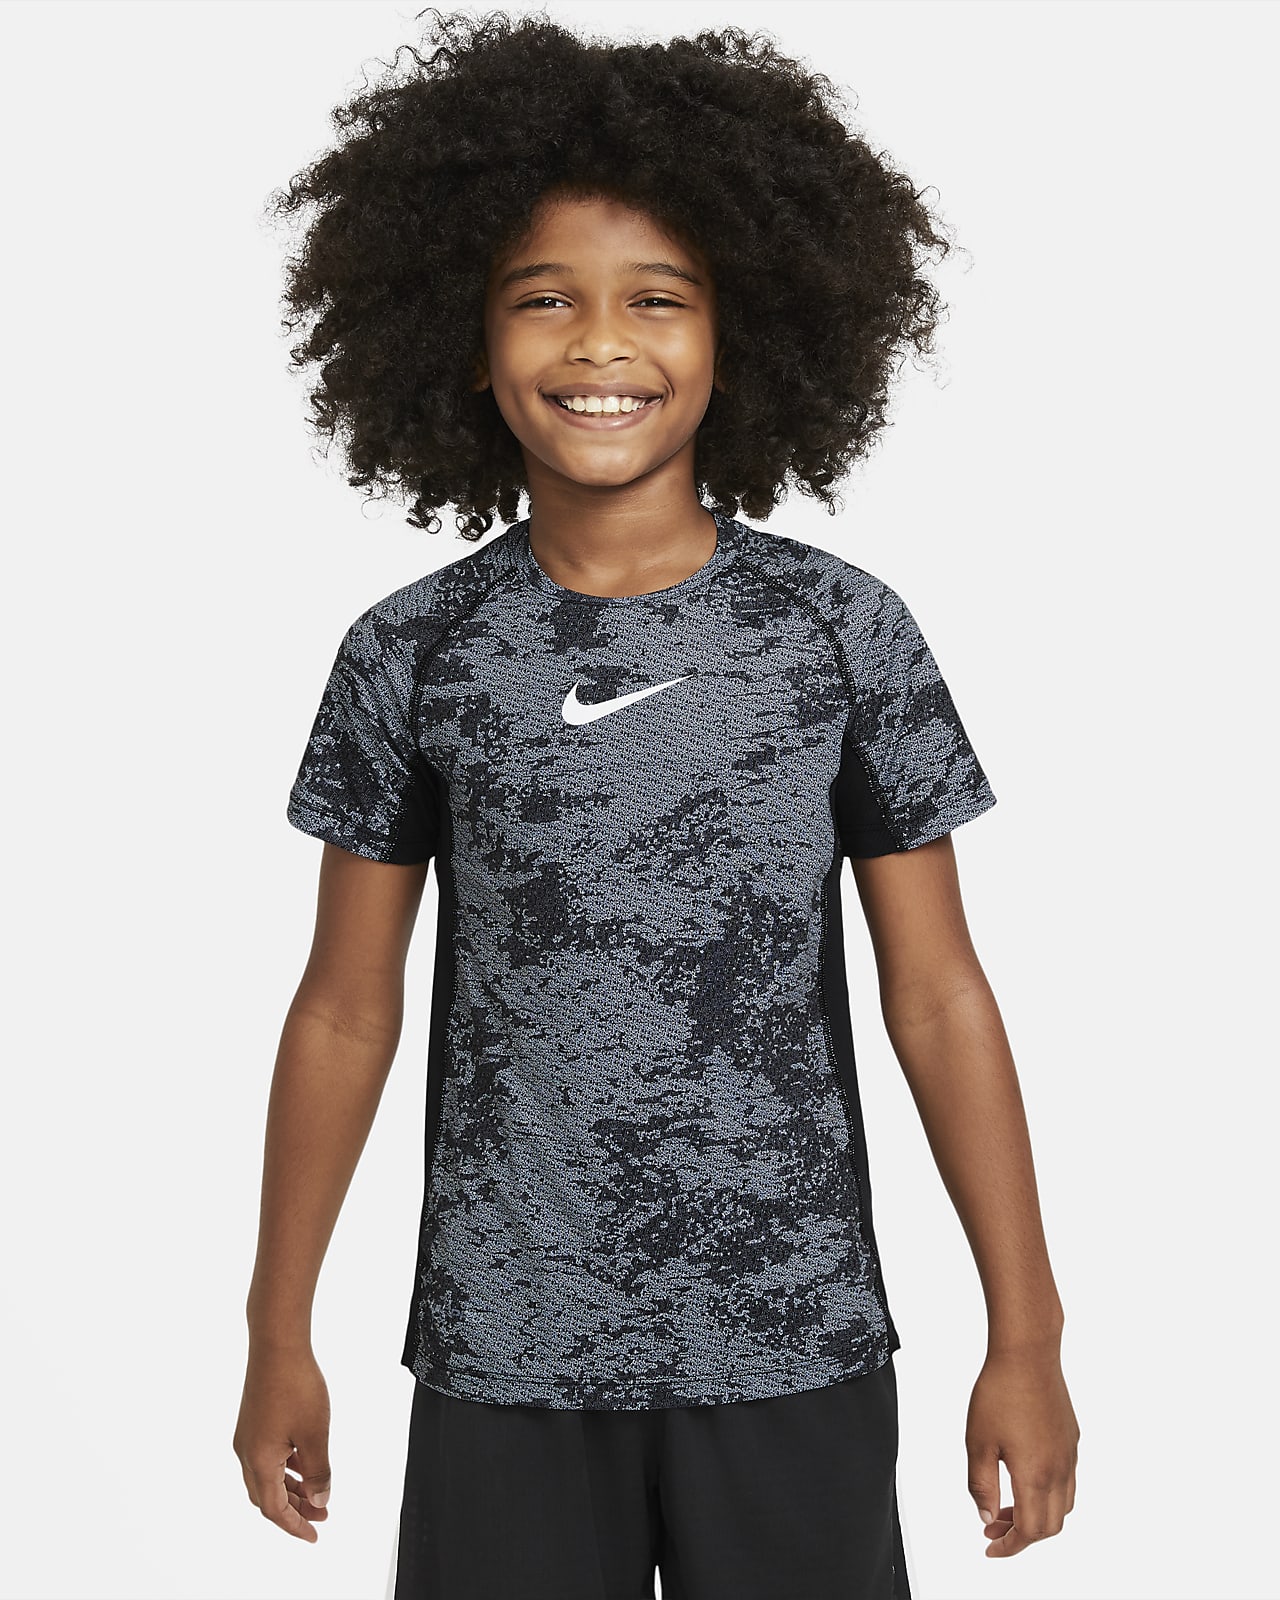 Nike Pro Trainings Oberteil Mit Print Fur Altere Kinder Jungen Nike Ch